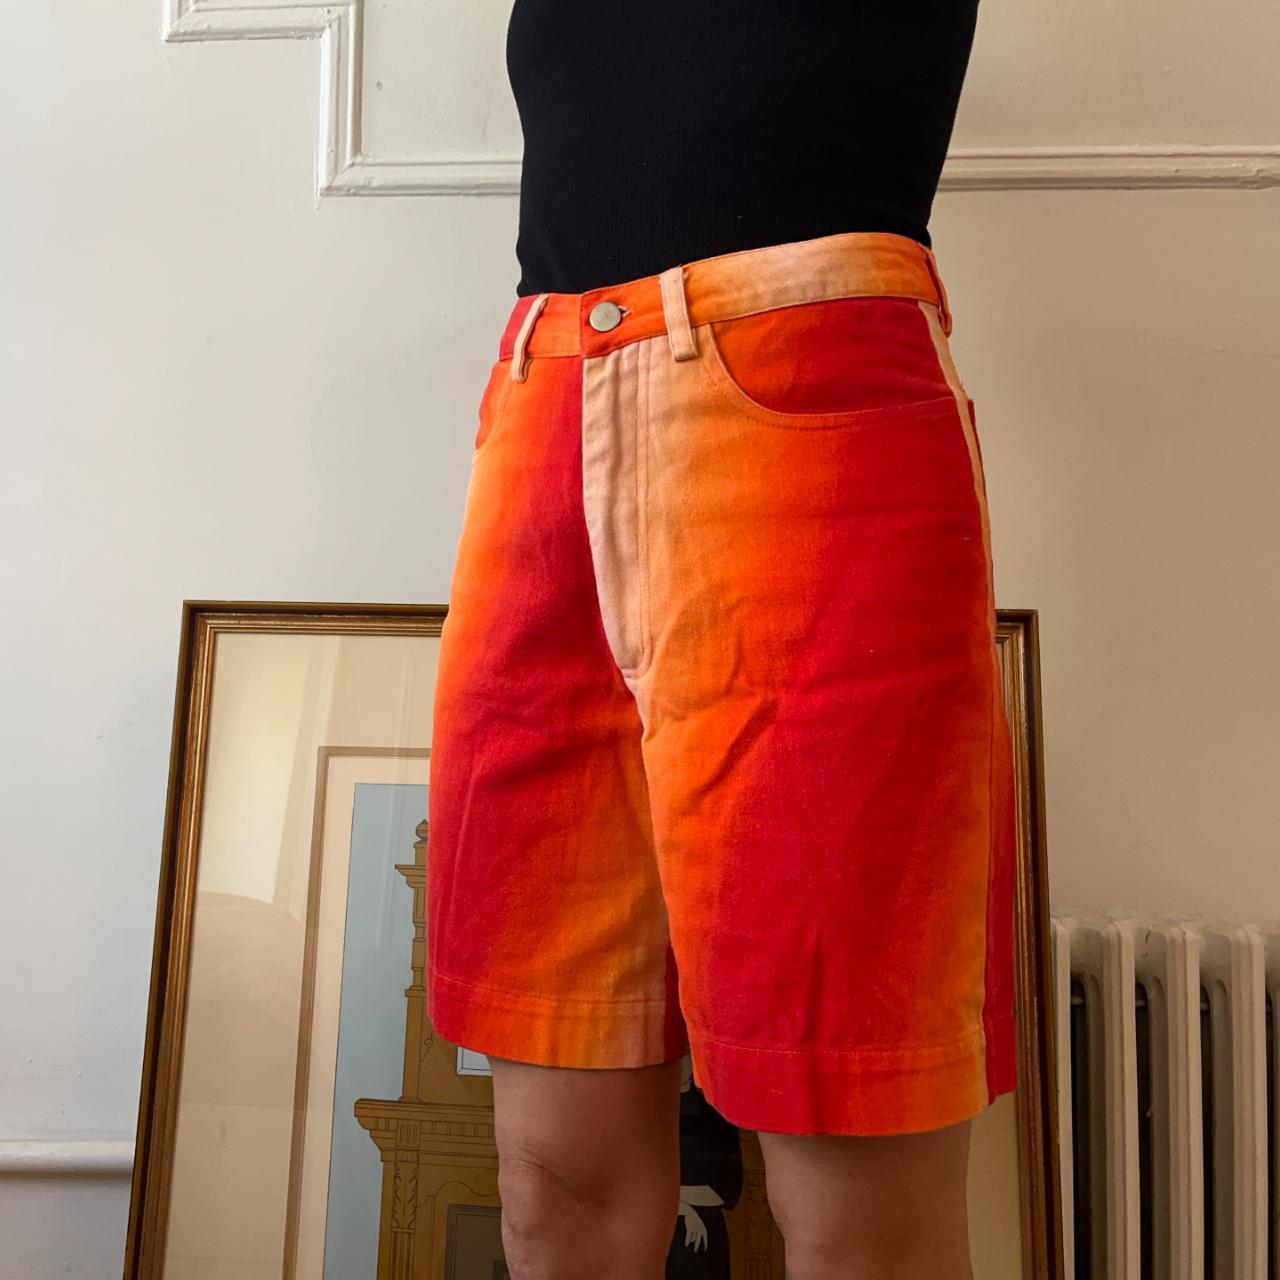 Hosbjerg Women's Orange Shorts (2)